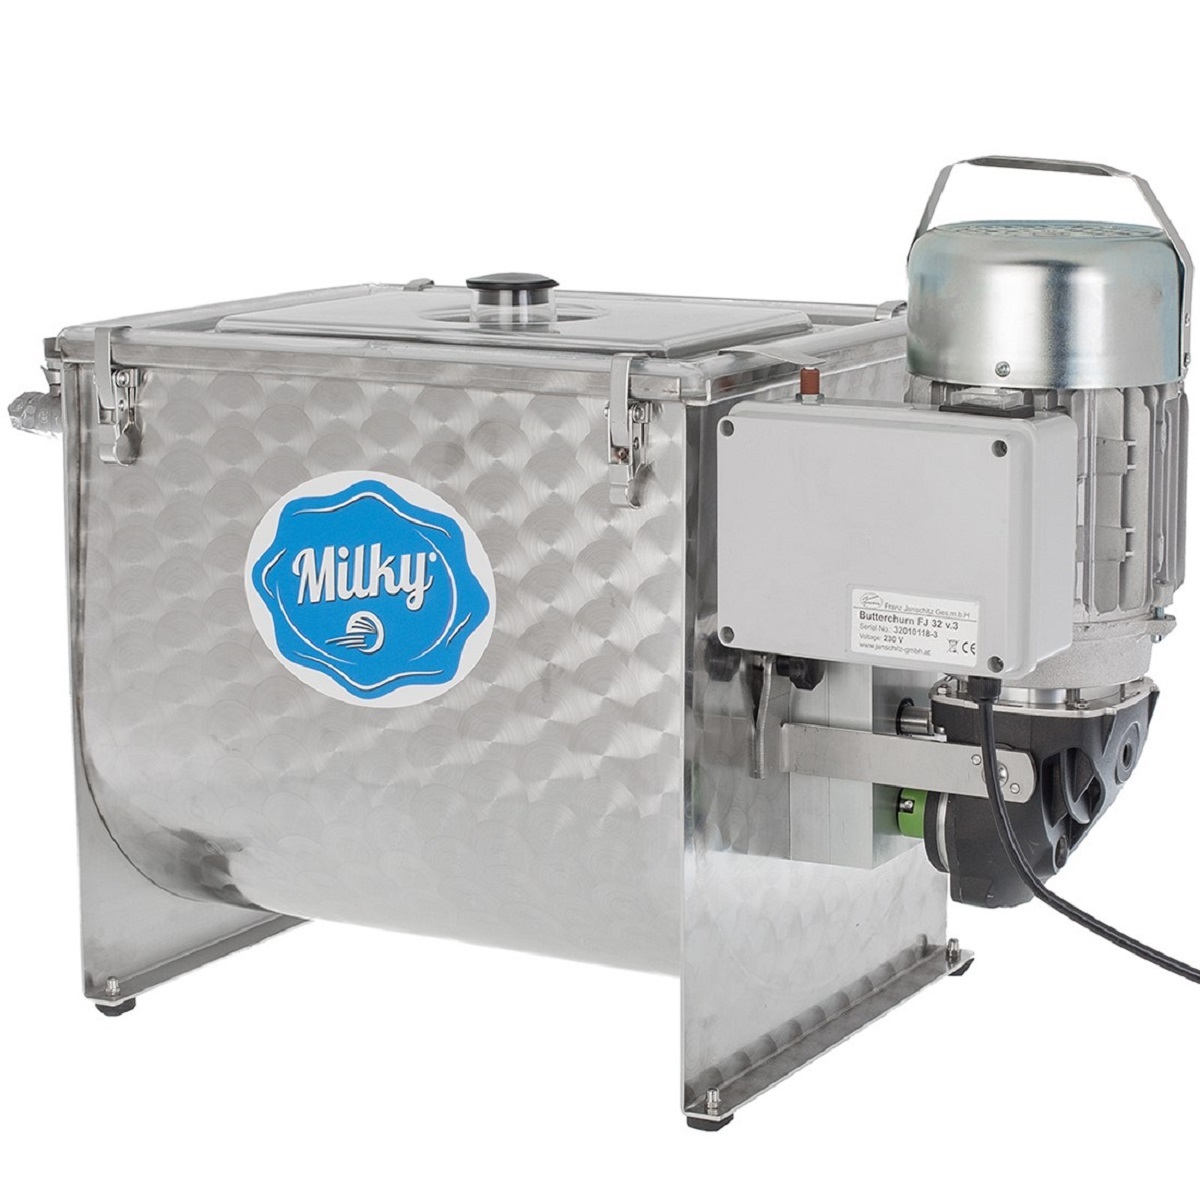 Milky Butter machine FJ 32, electric